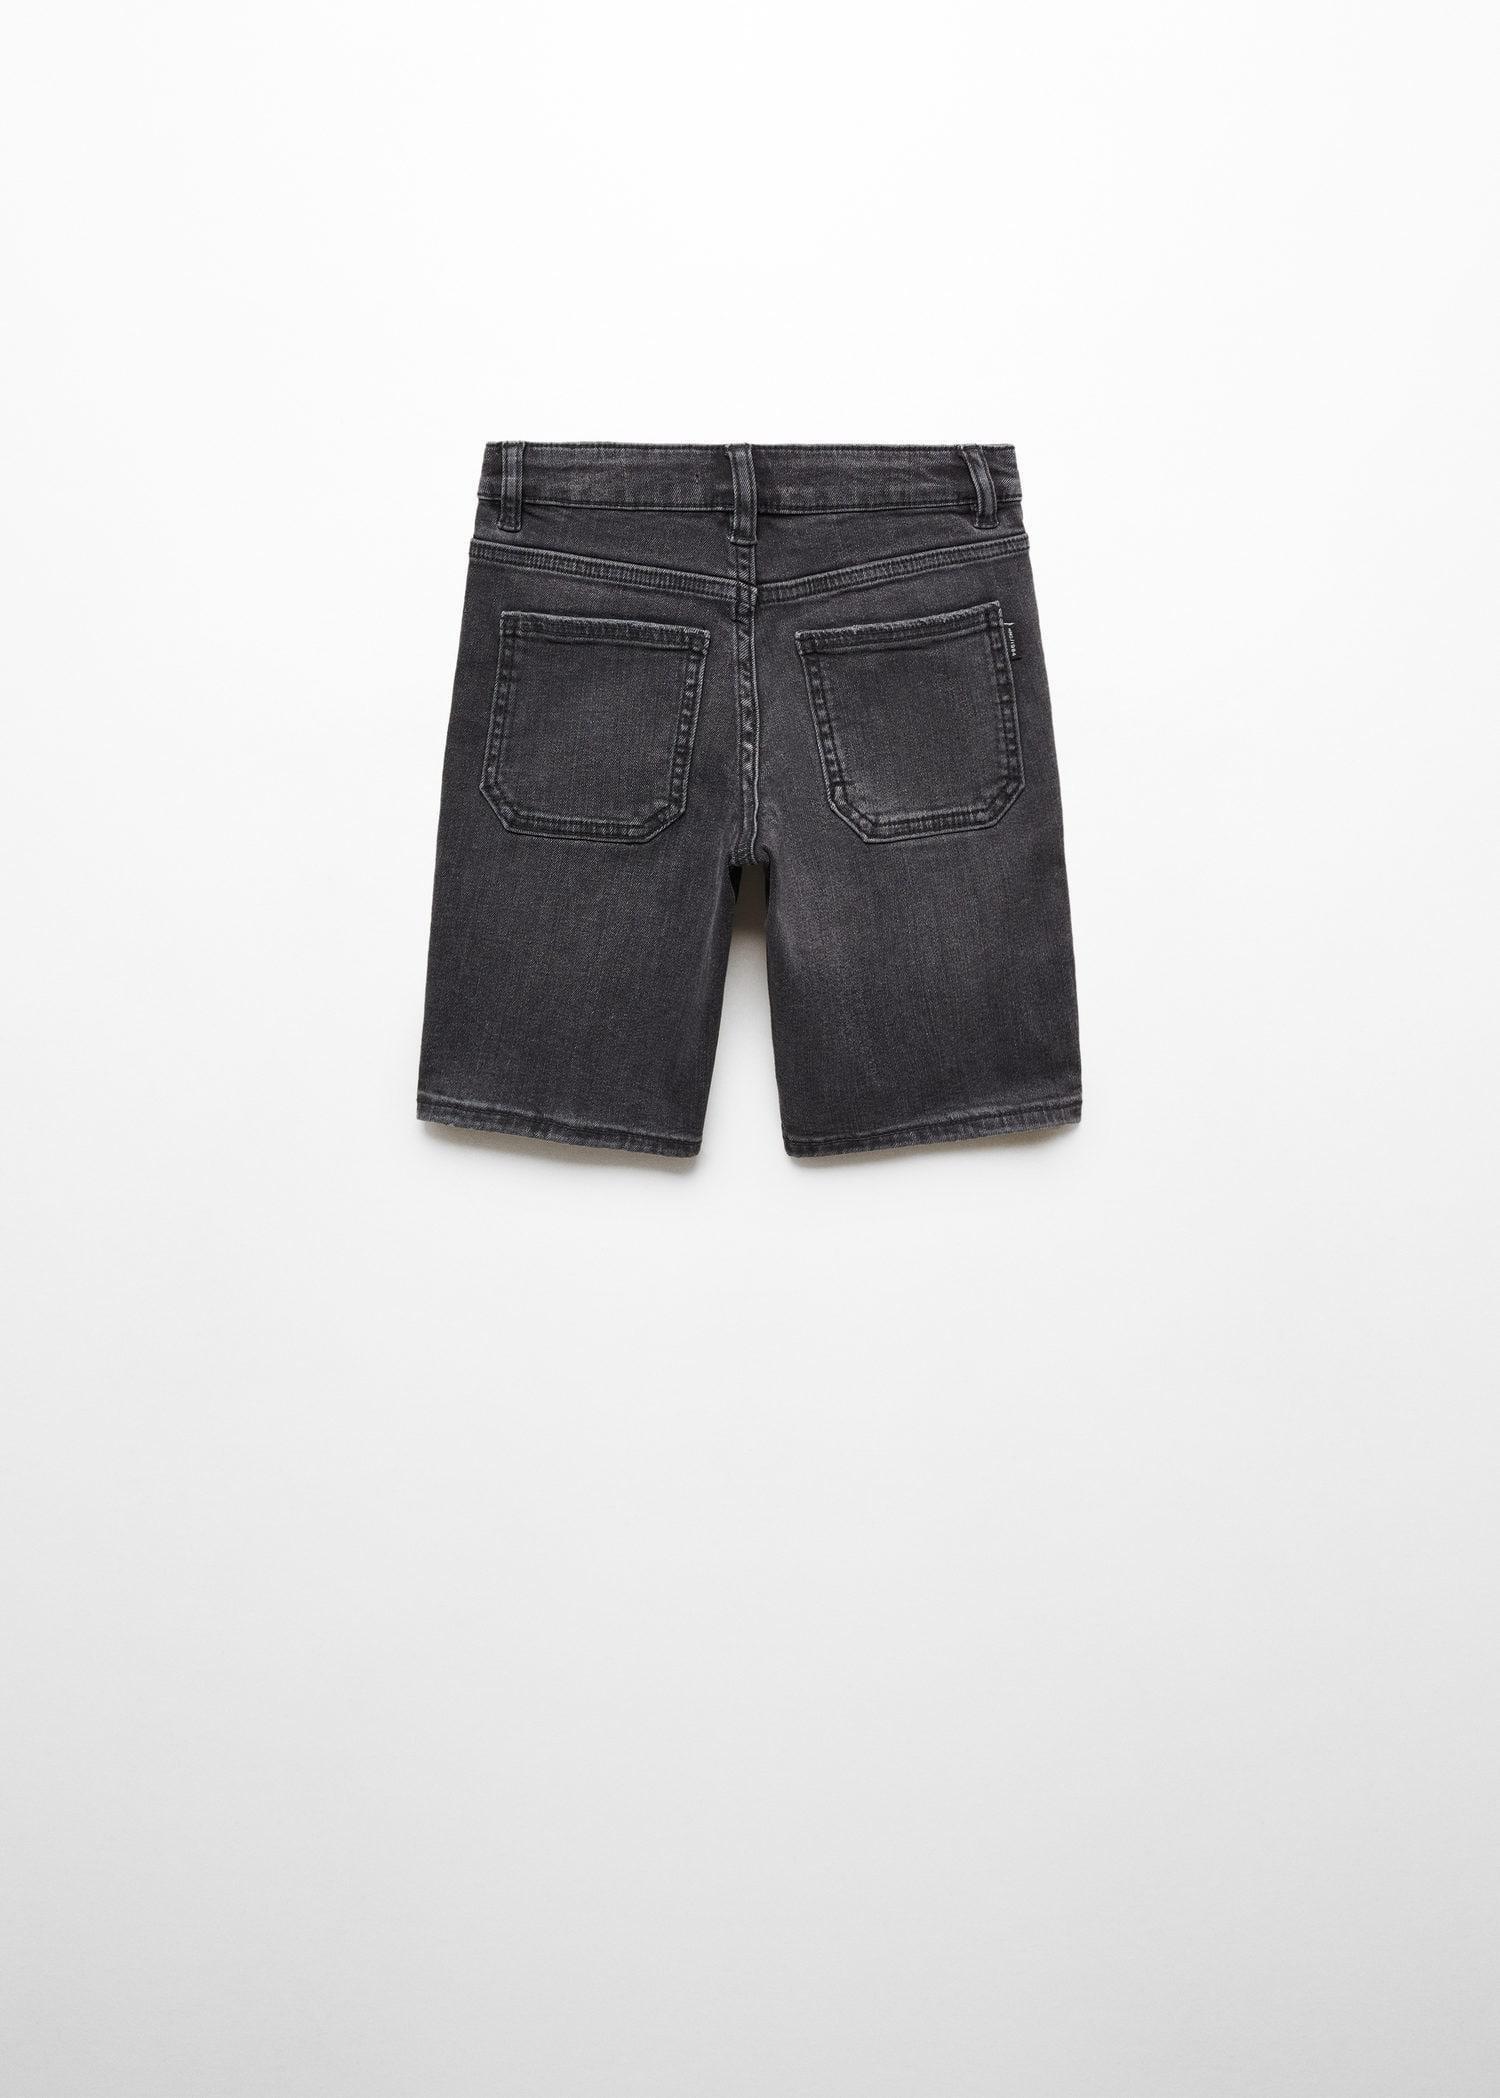 Mango - Grey Slim-Fit Denim Bermuda Shorts, Kids Boys